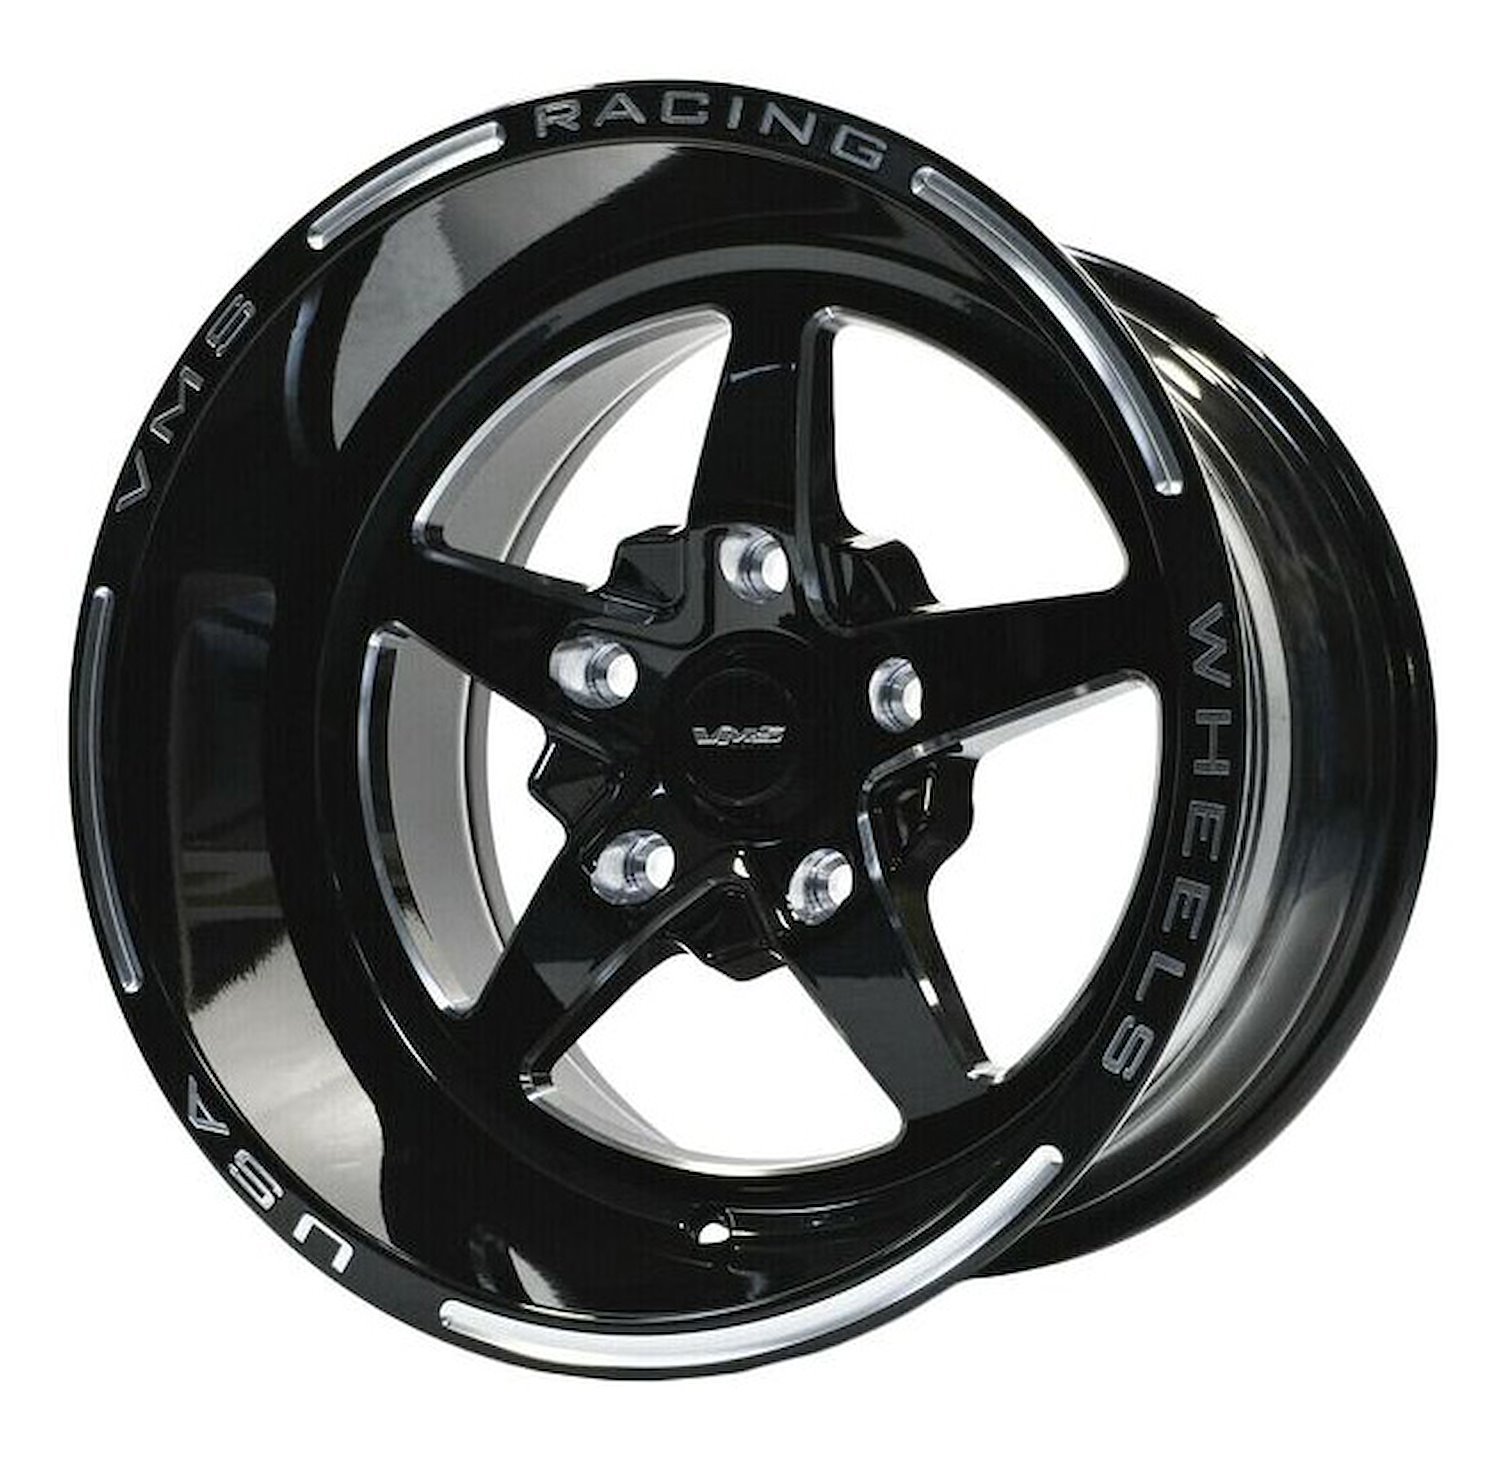 VWST056 V-Star Wheel, Size: 15" x 10", Bolt Pattern: 5 x 4 1/2" (114.3 mm) [Finish: Gloss Black Milled]